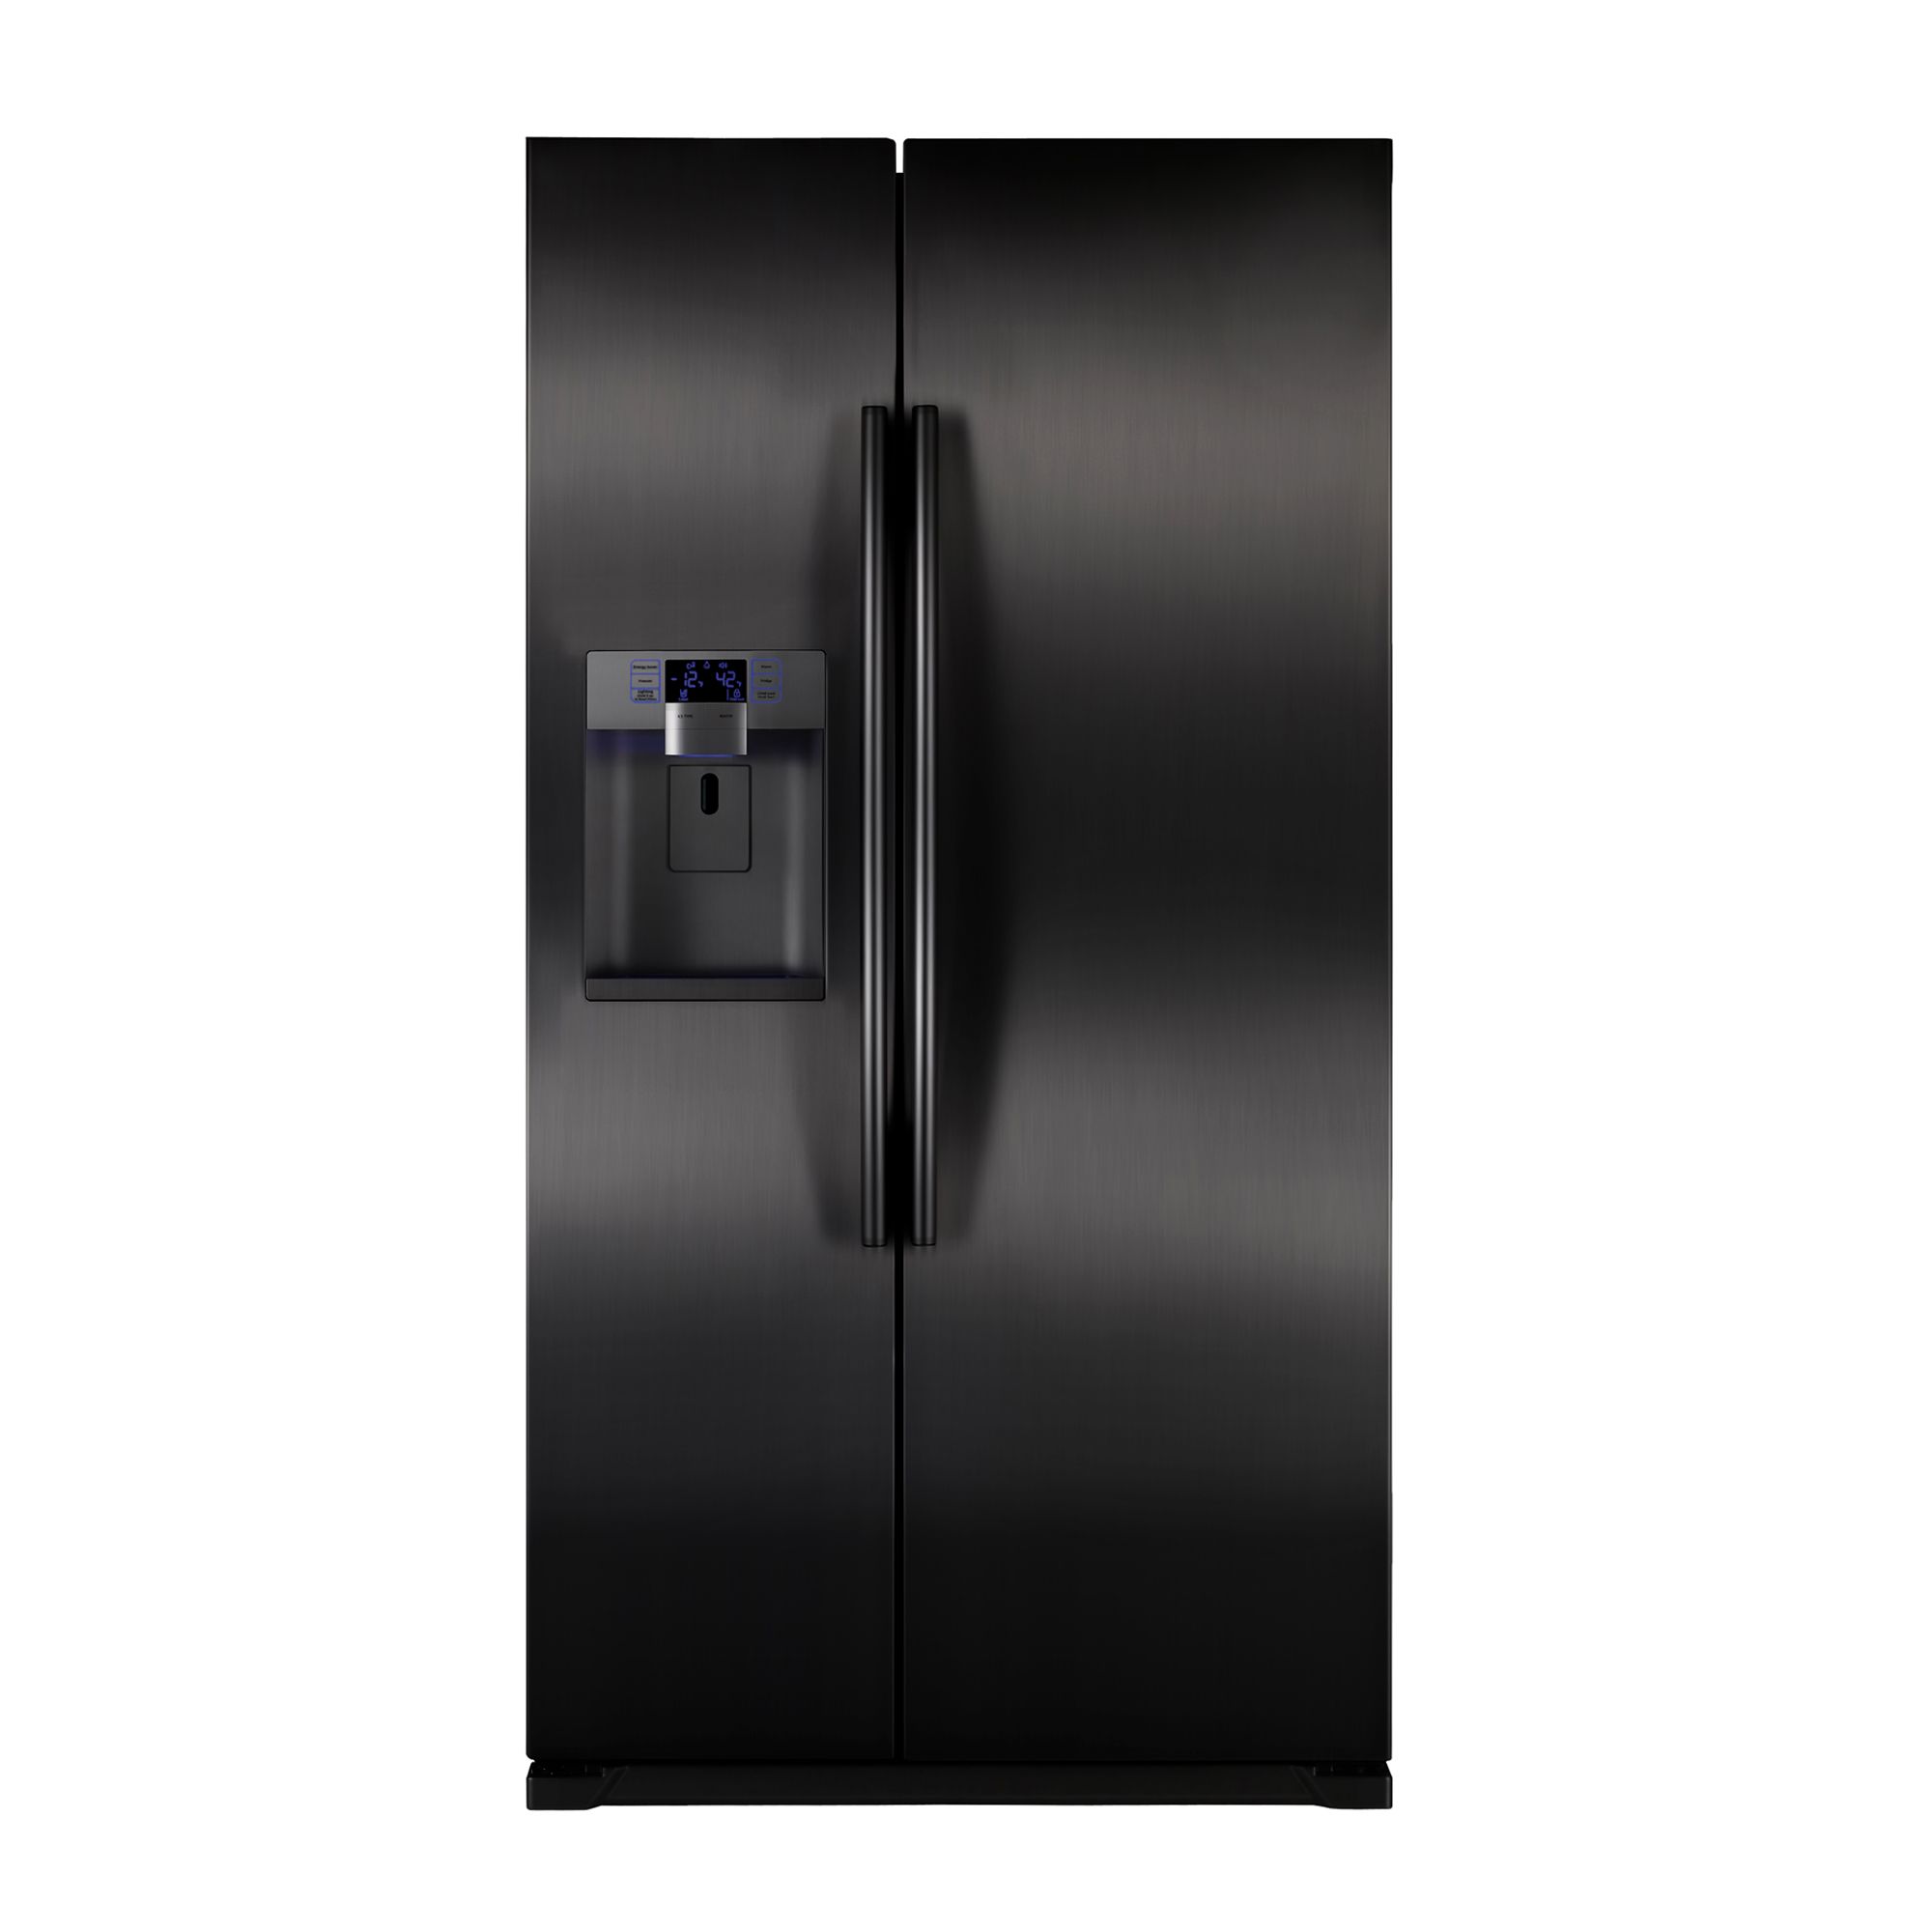 Samsung 24.1 cu. ft. Side-By-Side Refrigerator Black